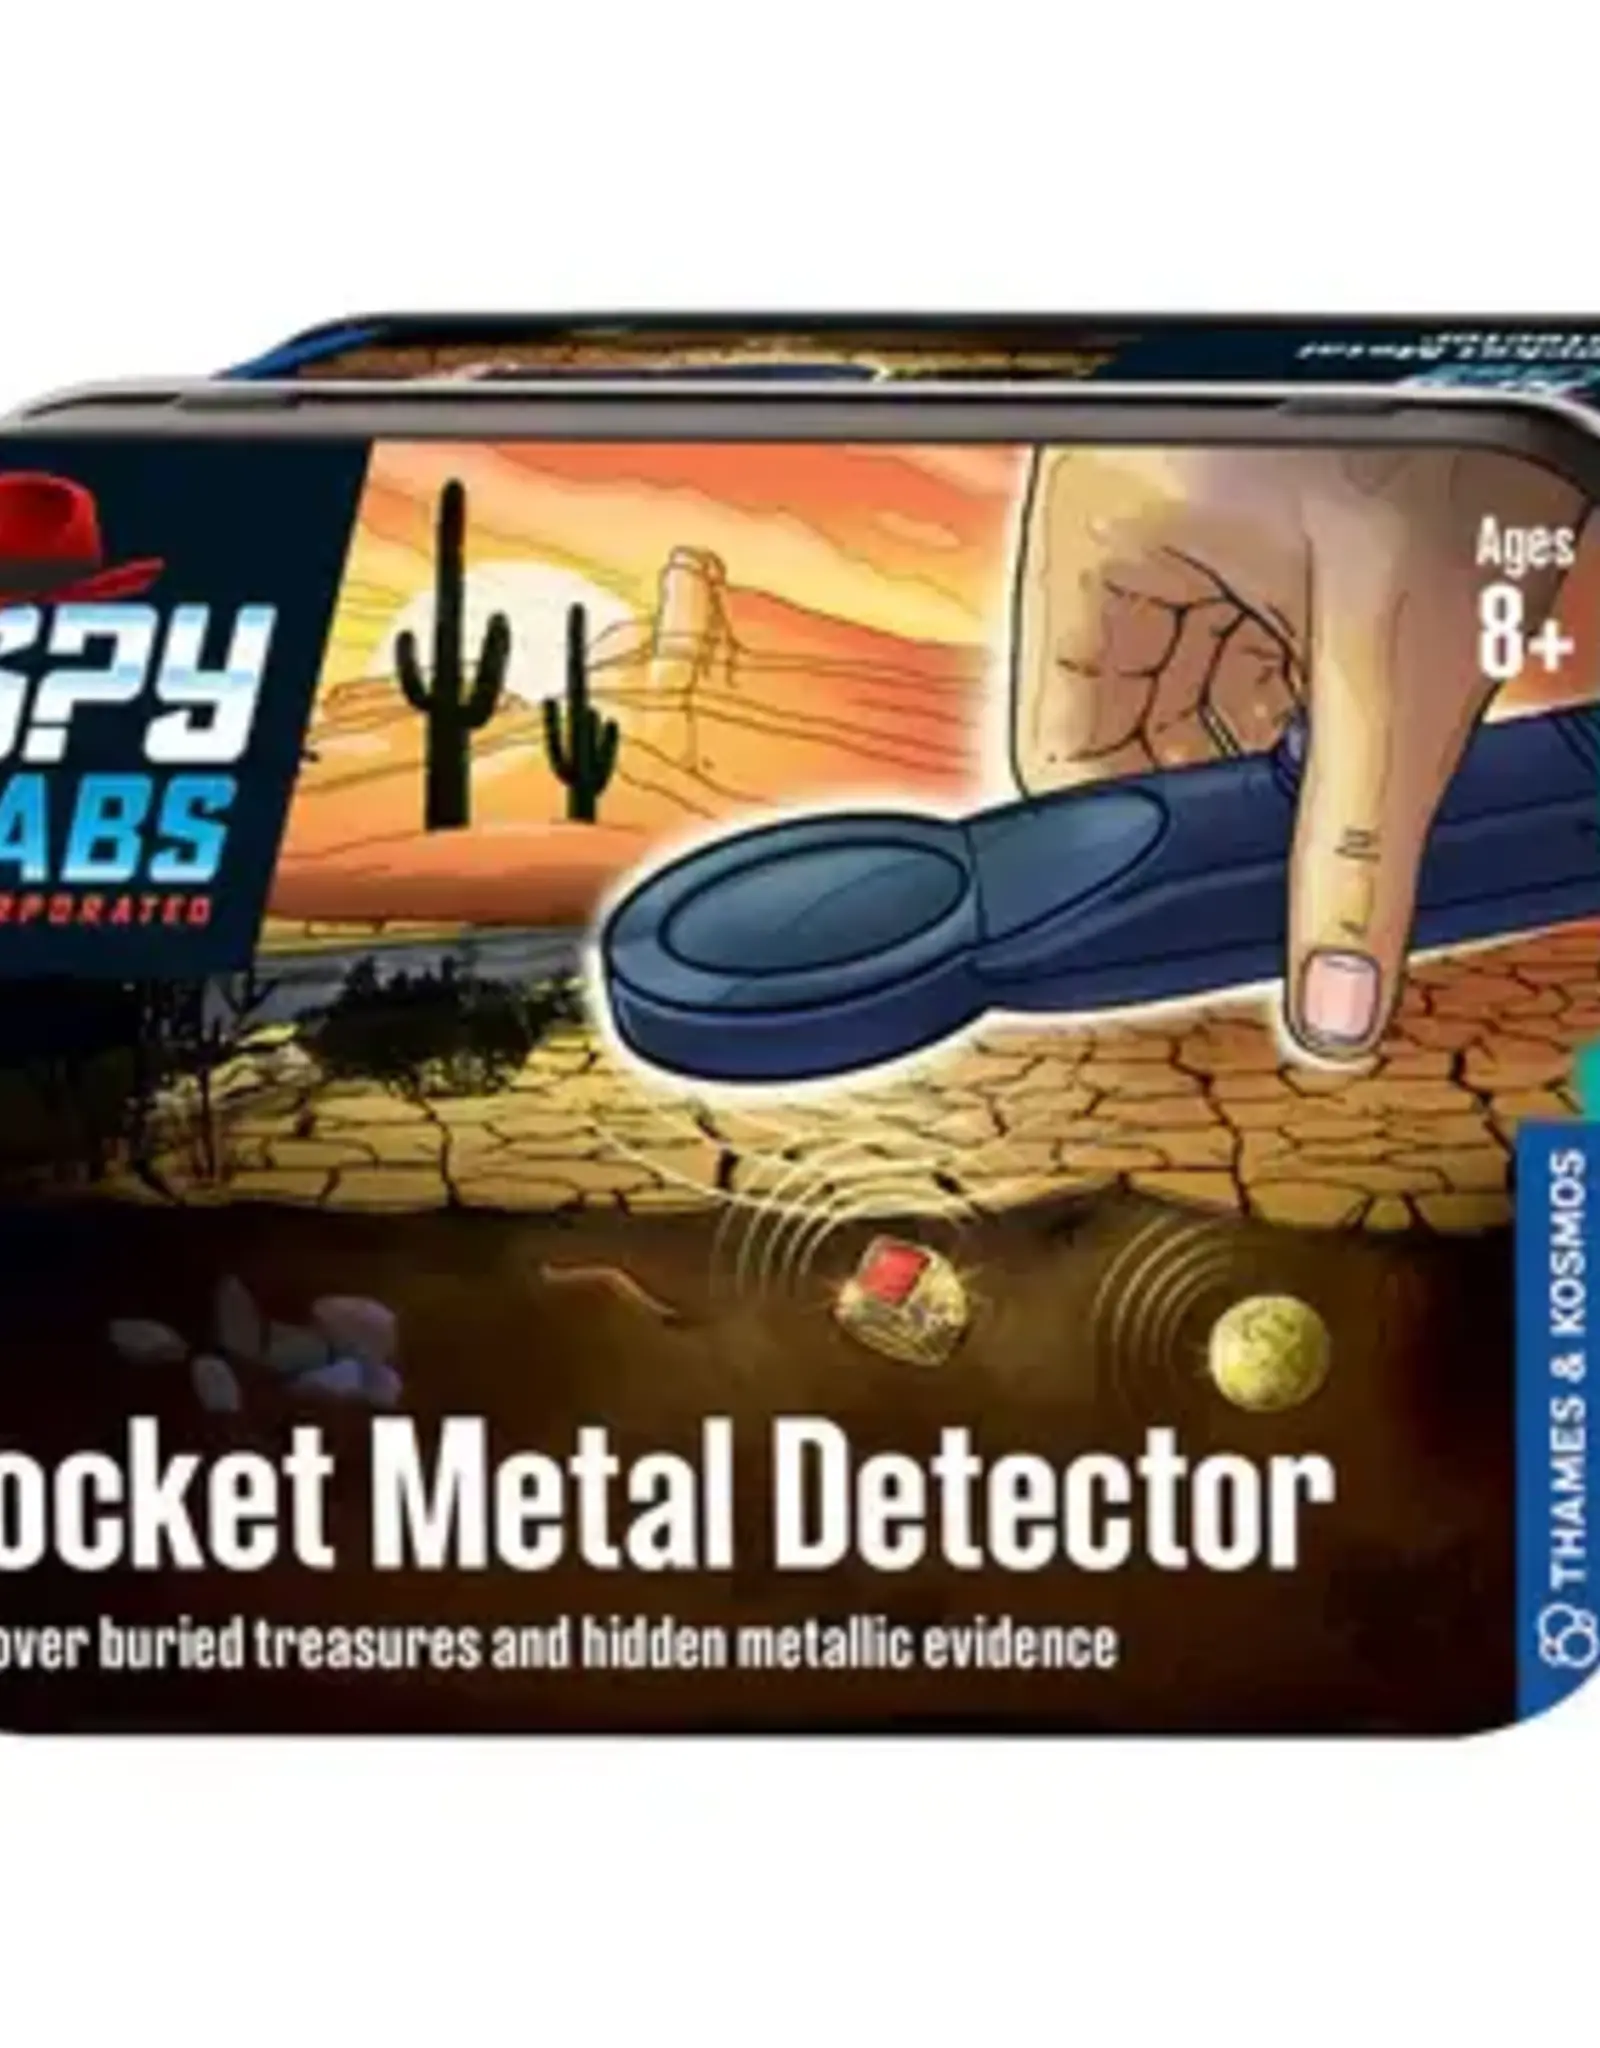 Thames & Kosmos Spy Labs: Pocket Metal Detector